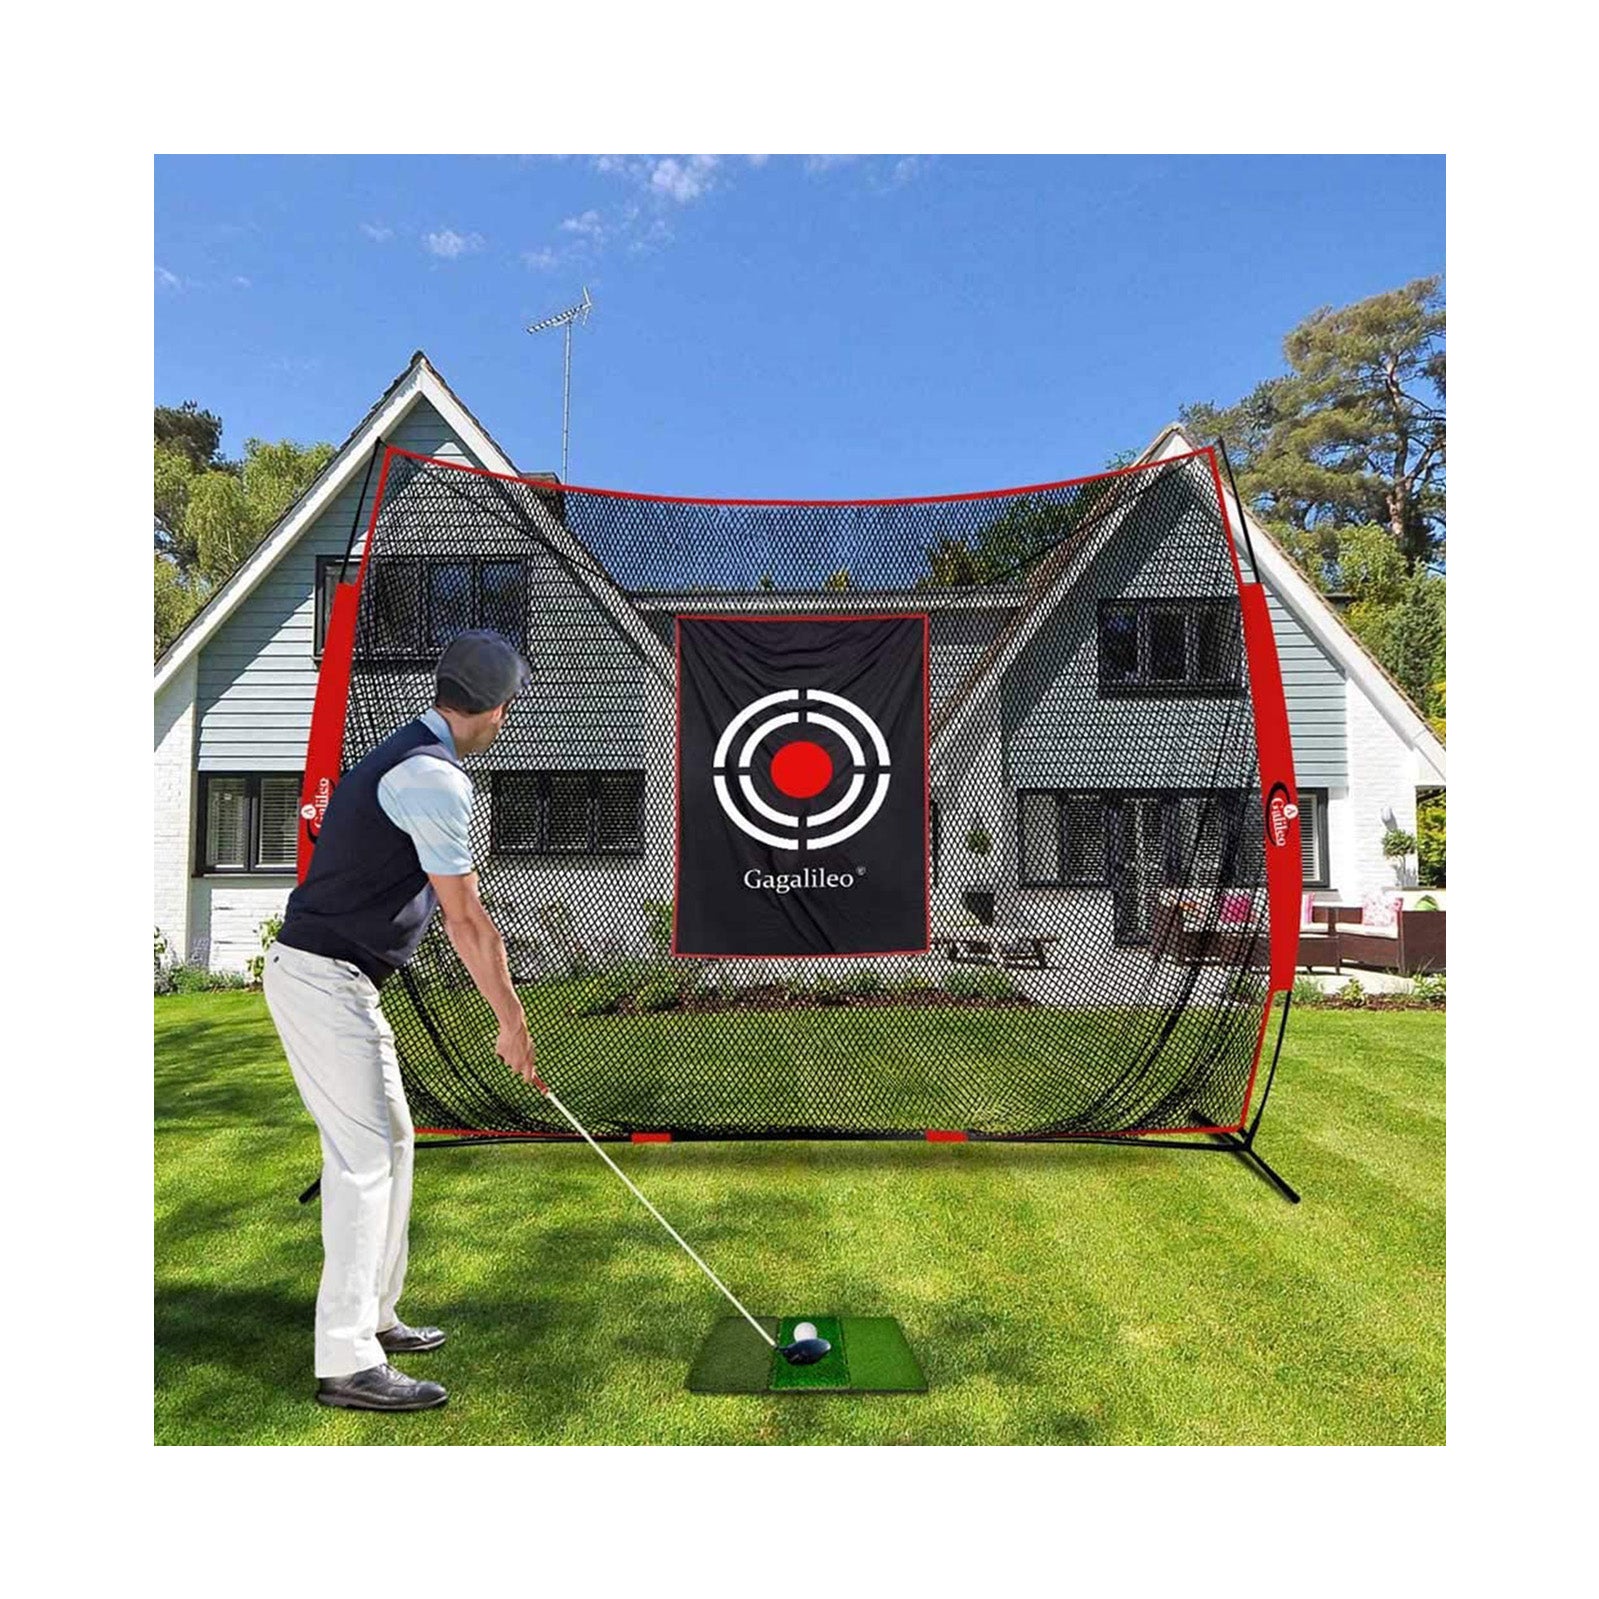 Redes de golf Red de práctica de golf Redes de golpeo de golf Campo de prácticas de golf para uso en interiores| 10X8FT| deportiert Galilei